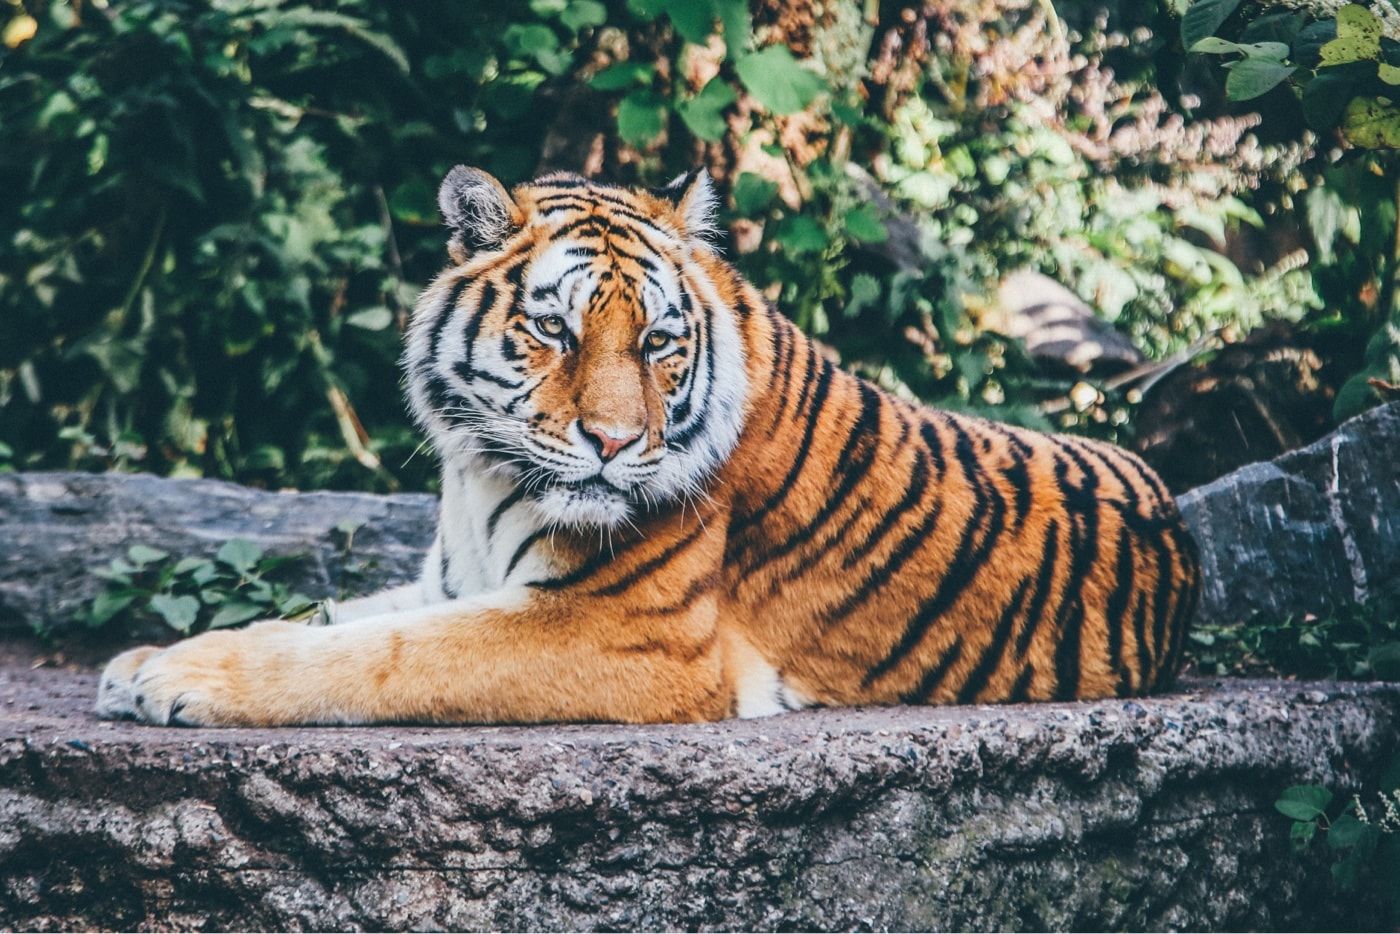 Sitting tiger